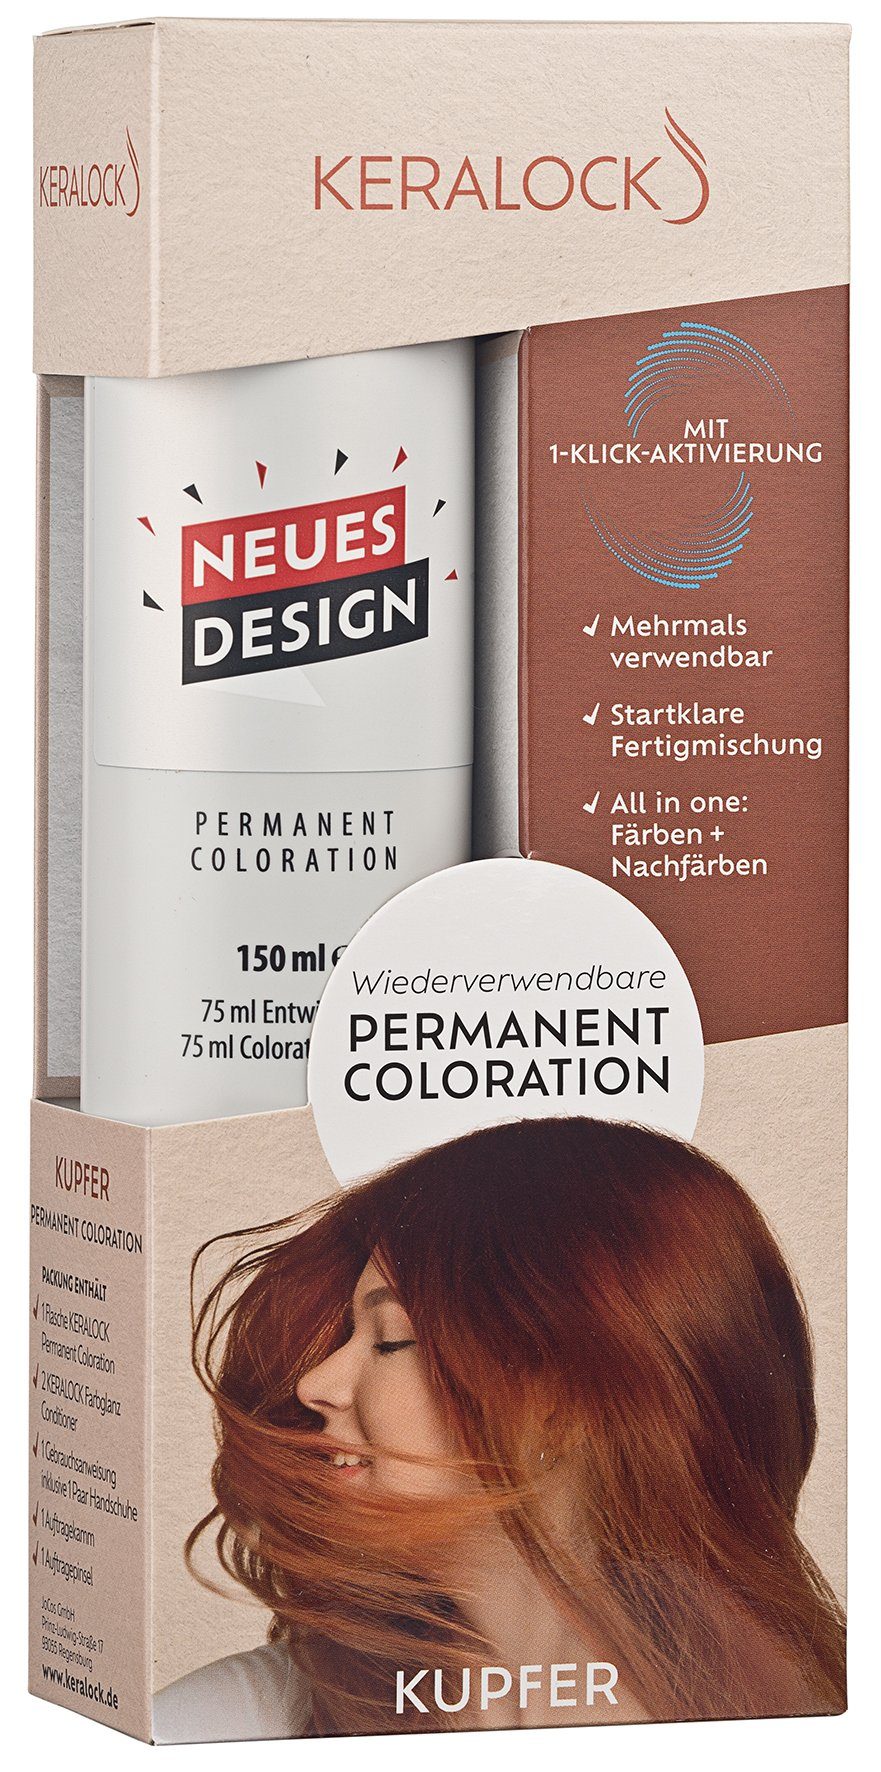 Keralock Coloration Wiederverwendbare Haarfarbe Kupfer